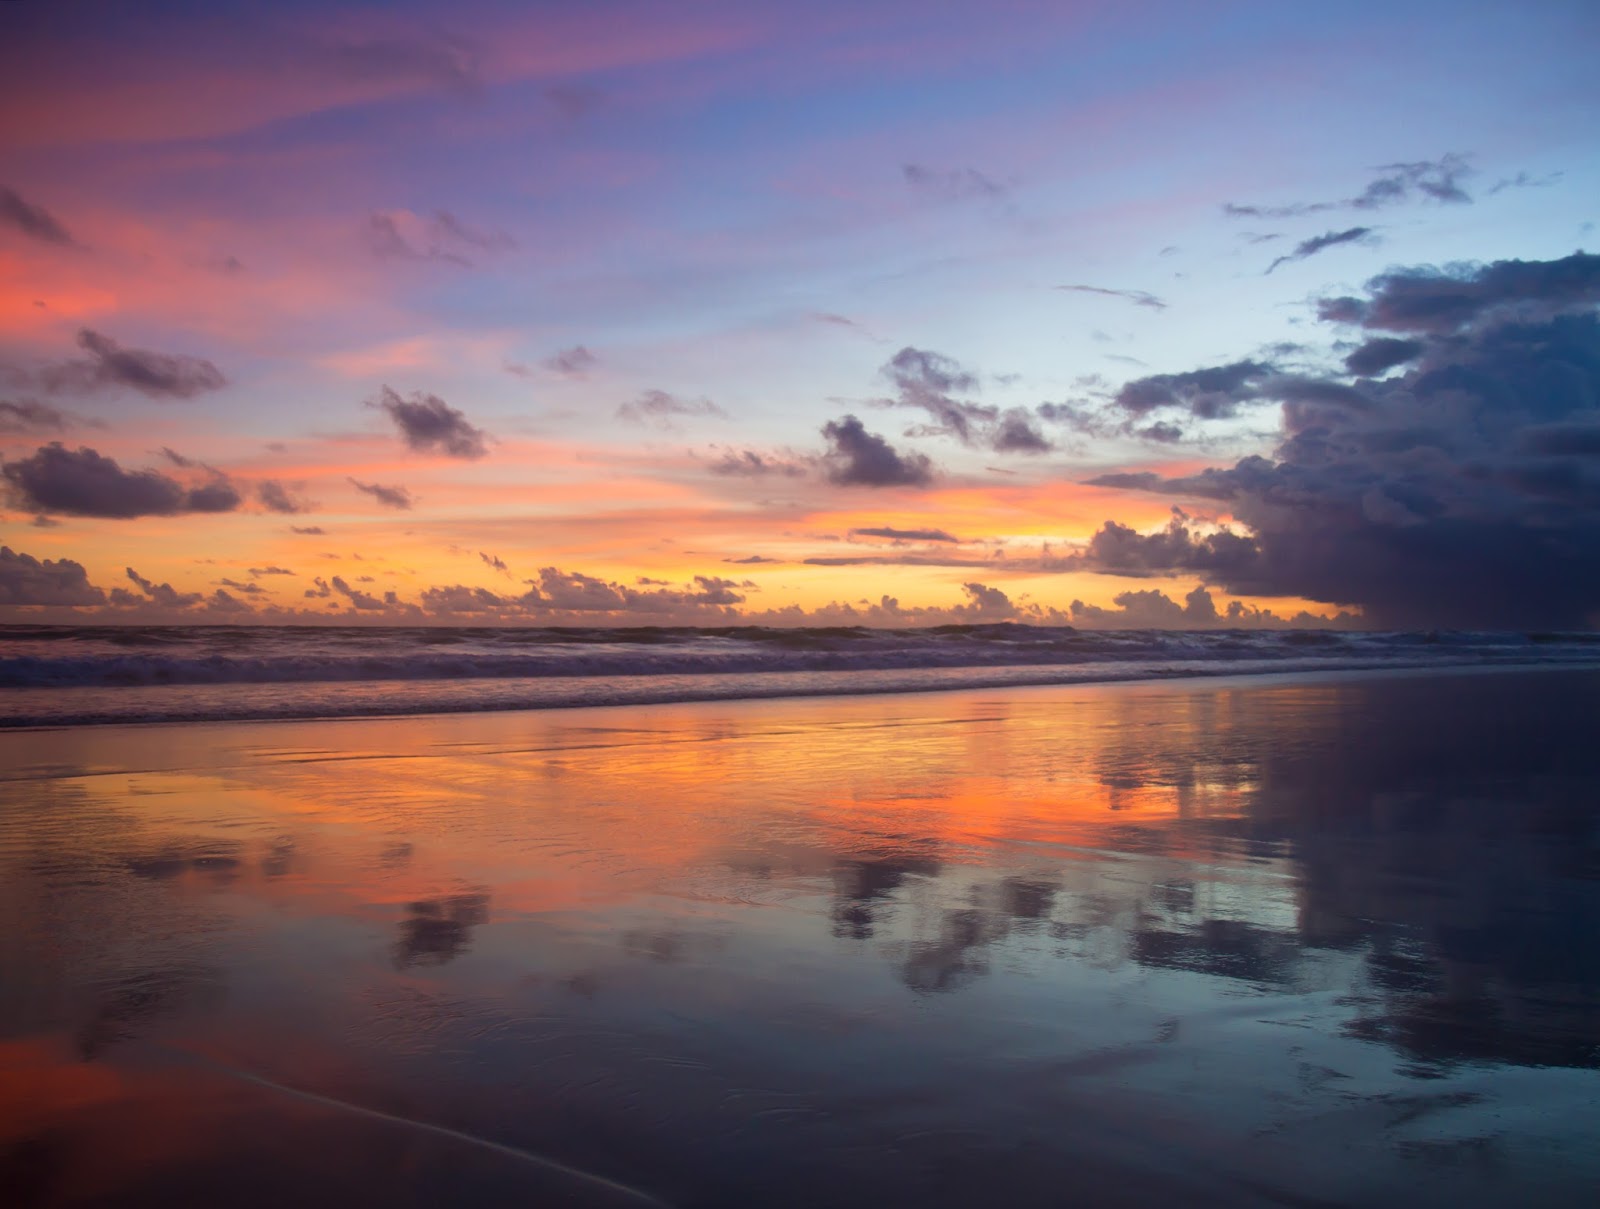 Sunset at Berawa Beach in Canggu, Bali